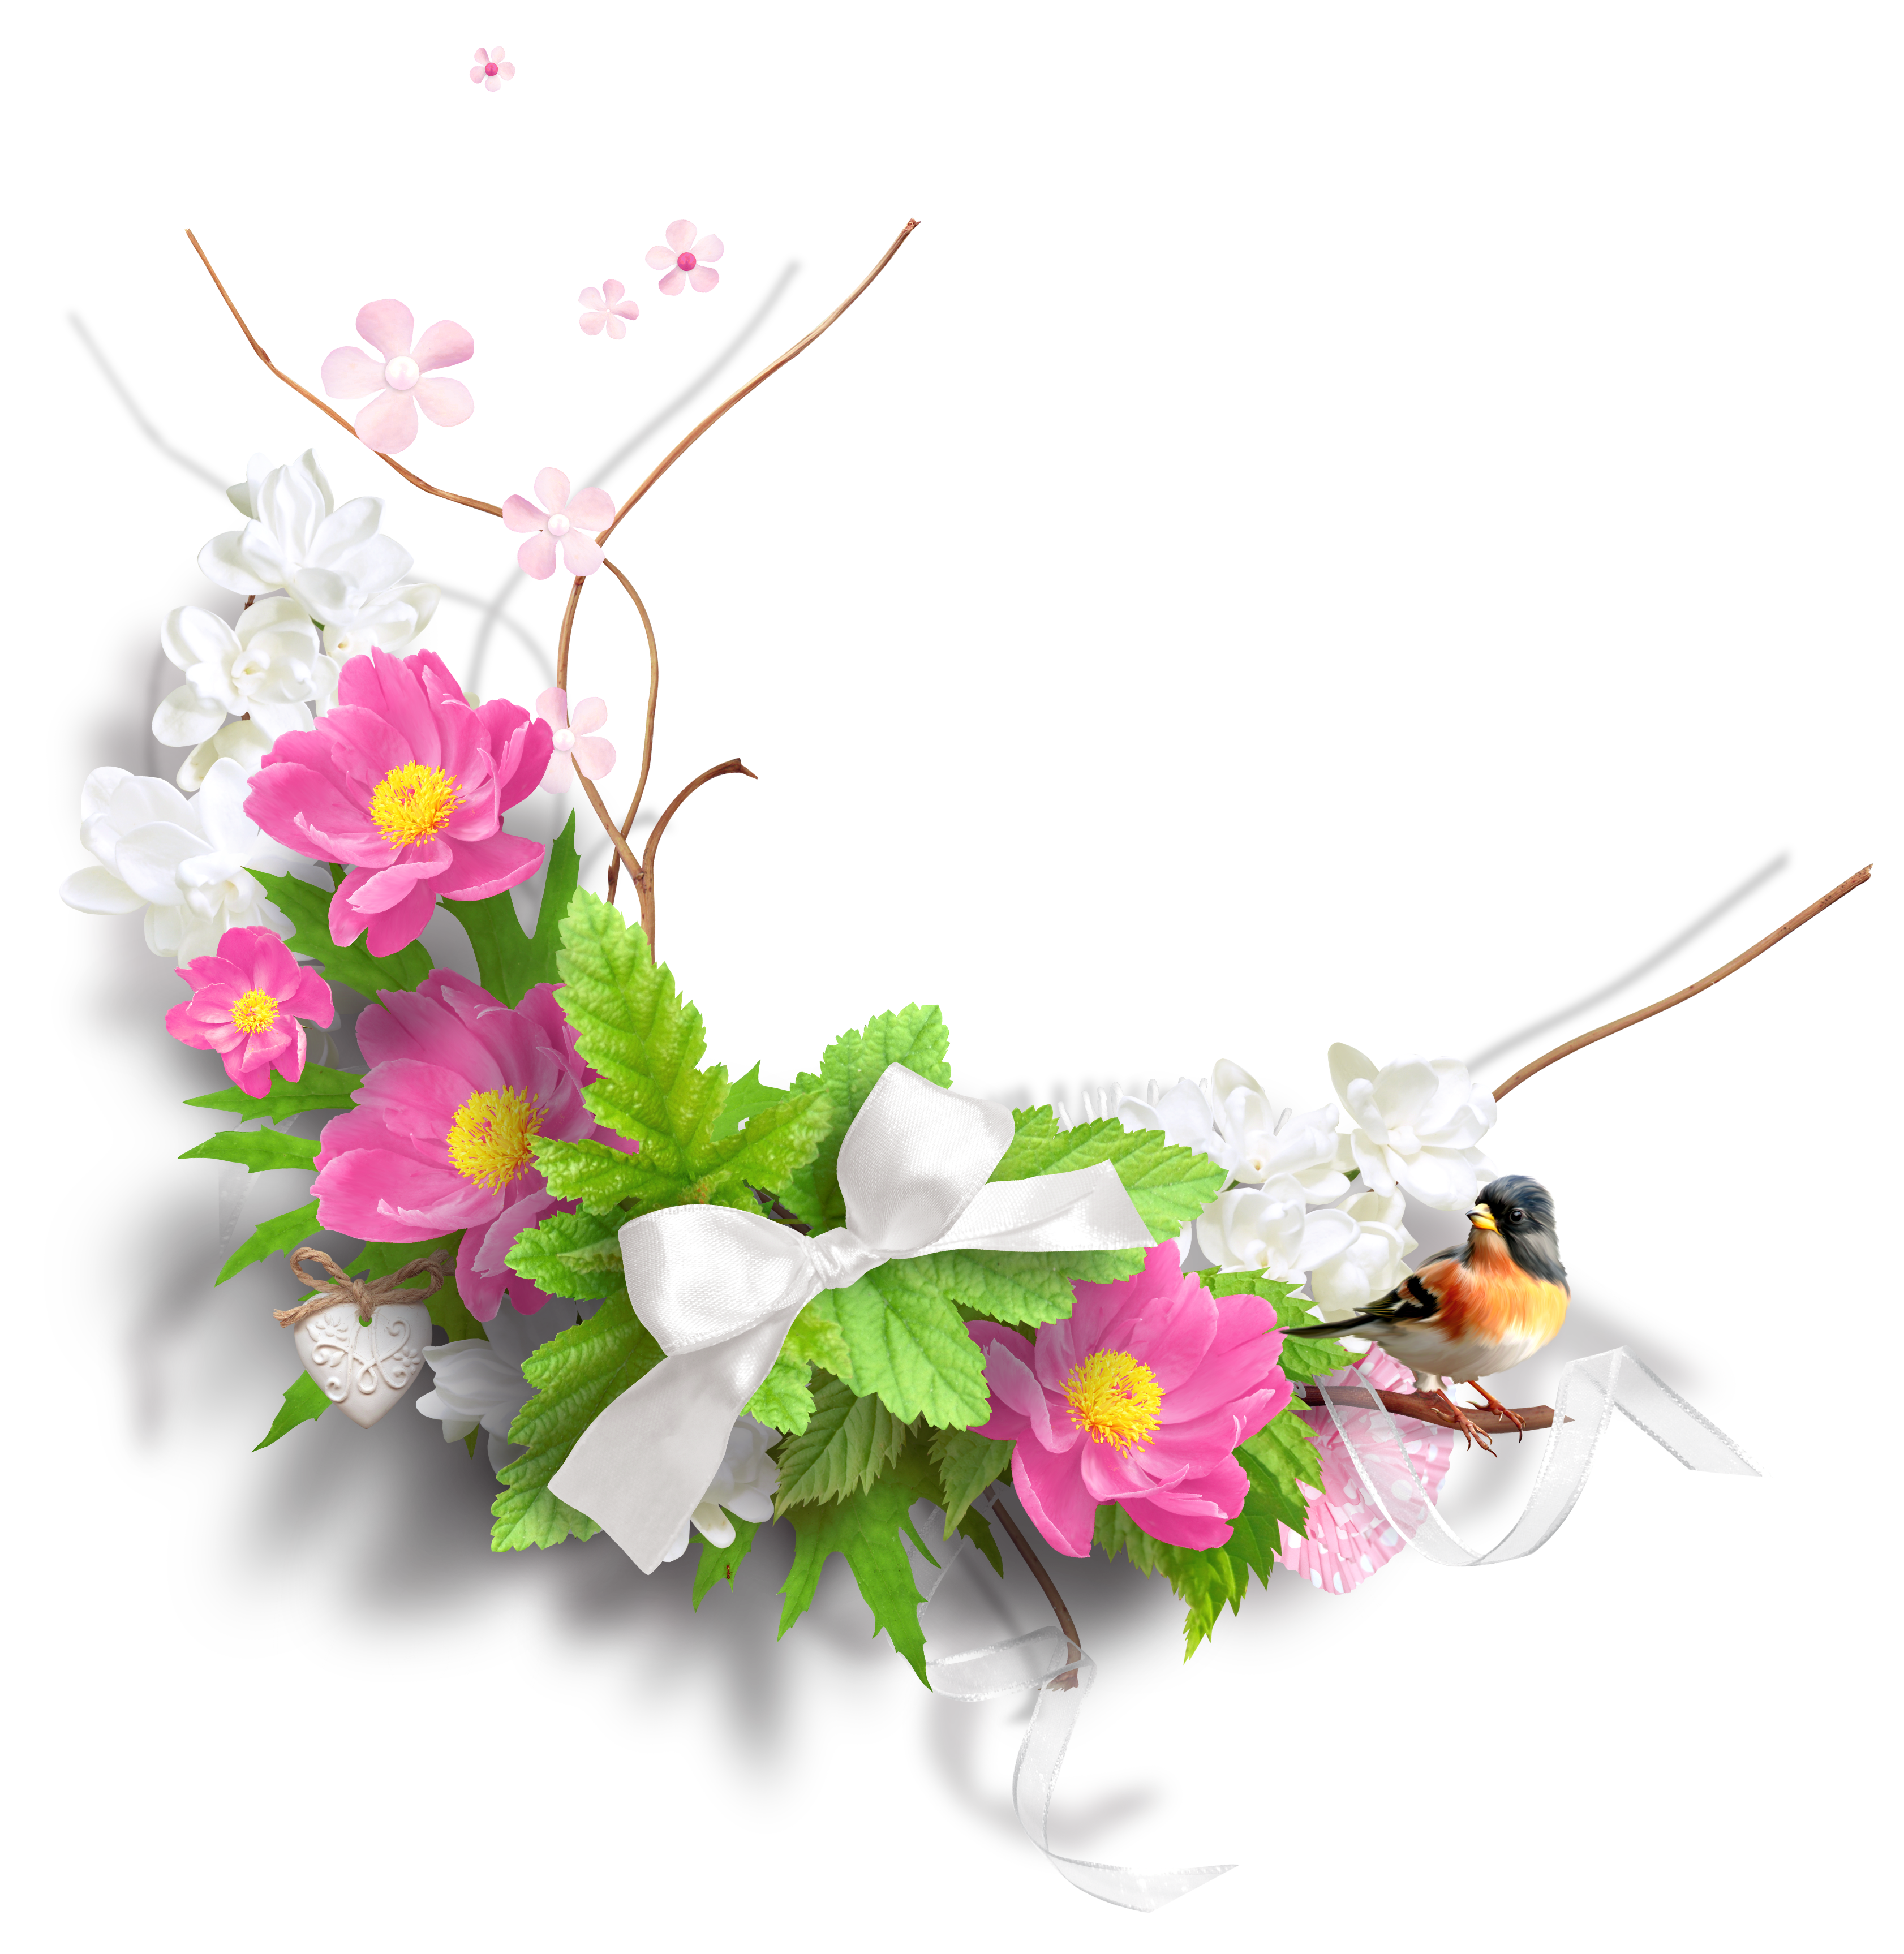 Spring Flowers Image PNG Transparent Background, Free Download #18159